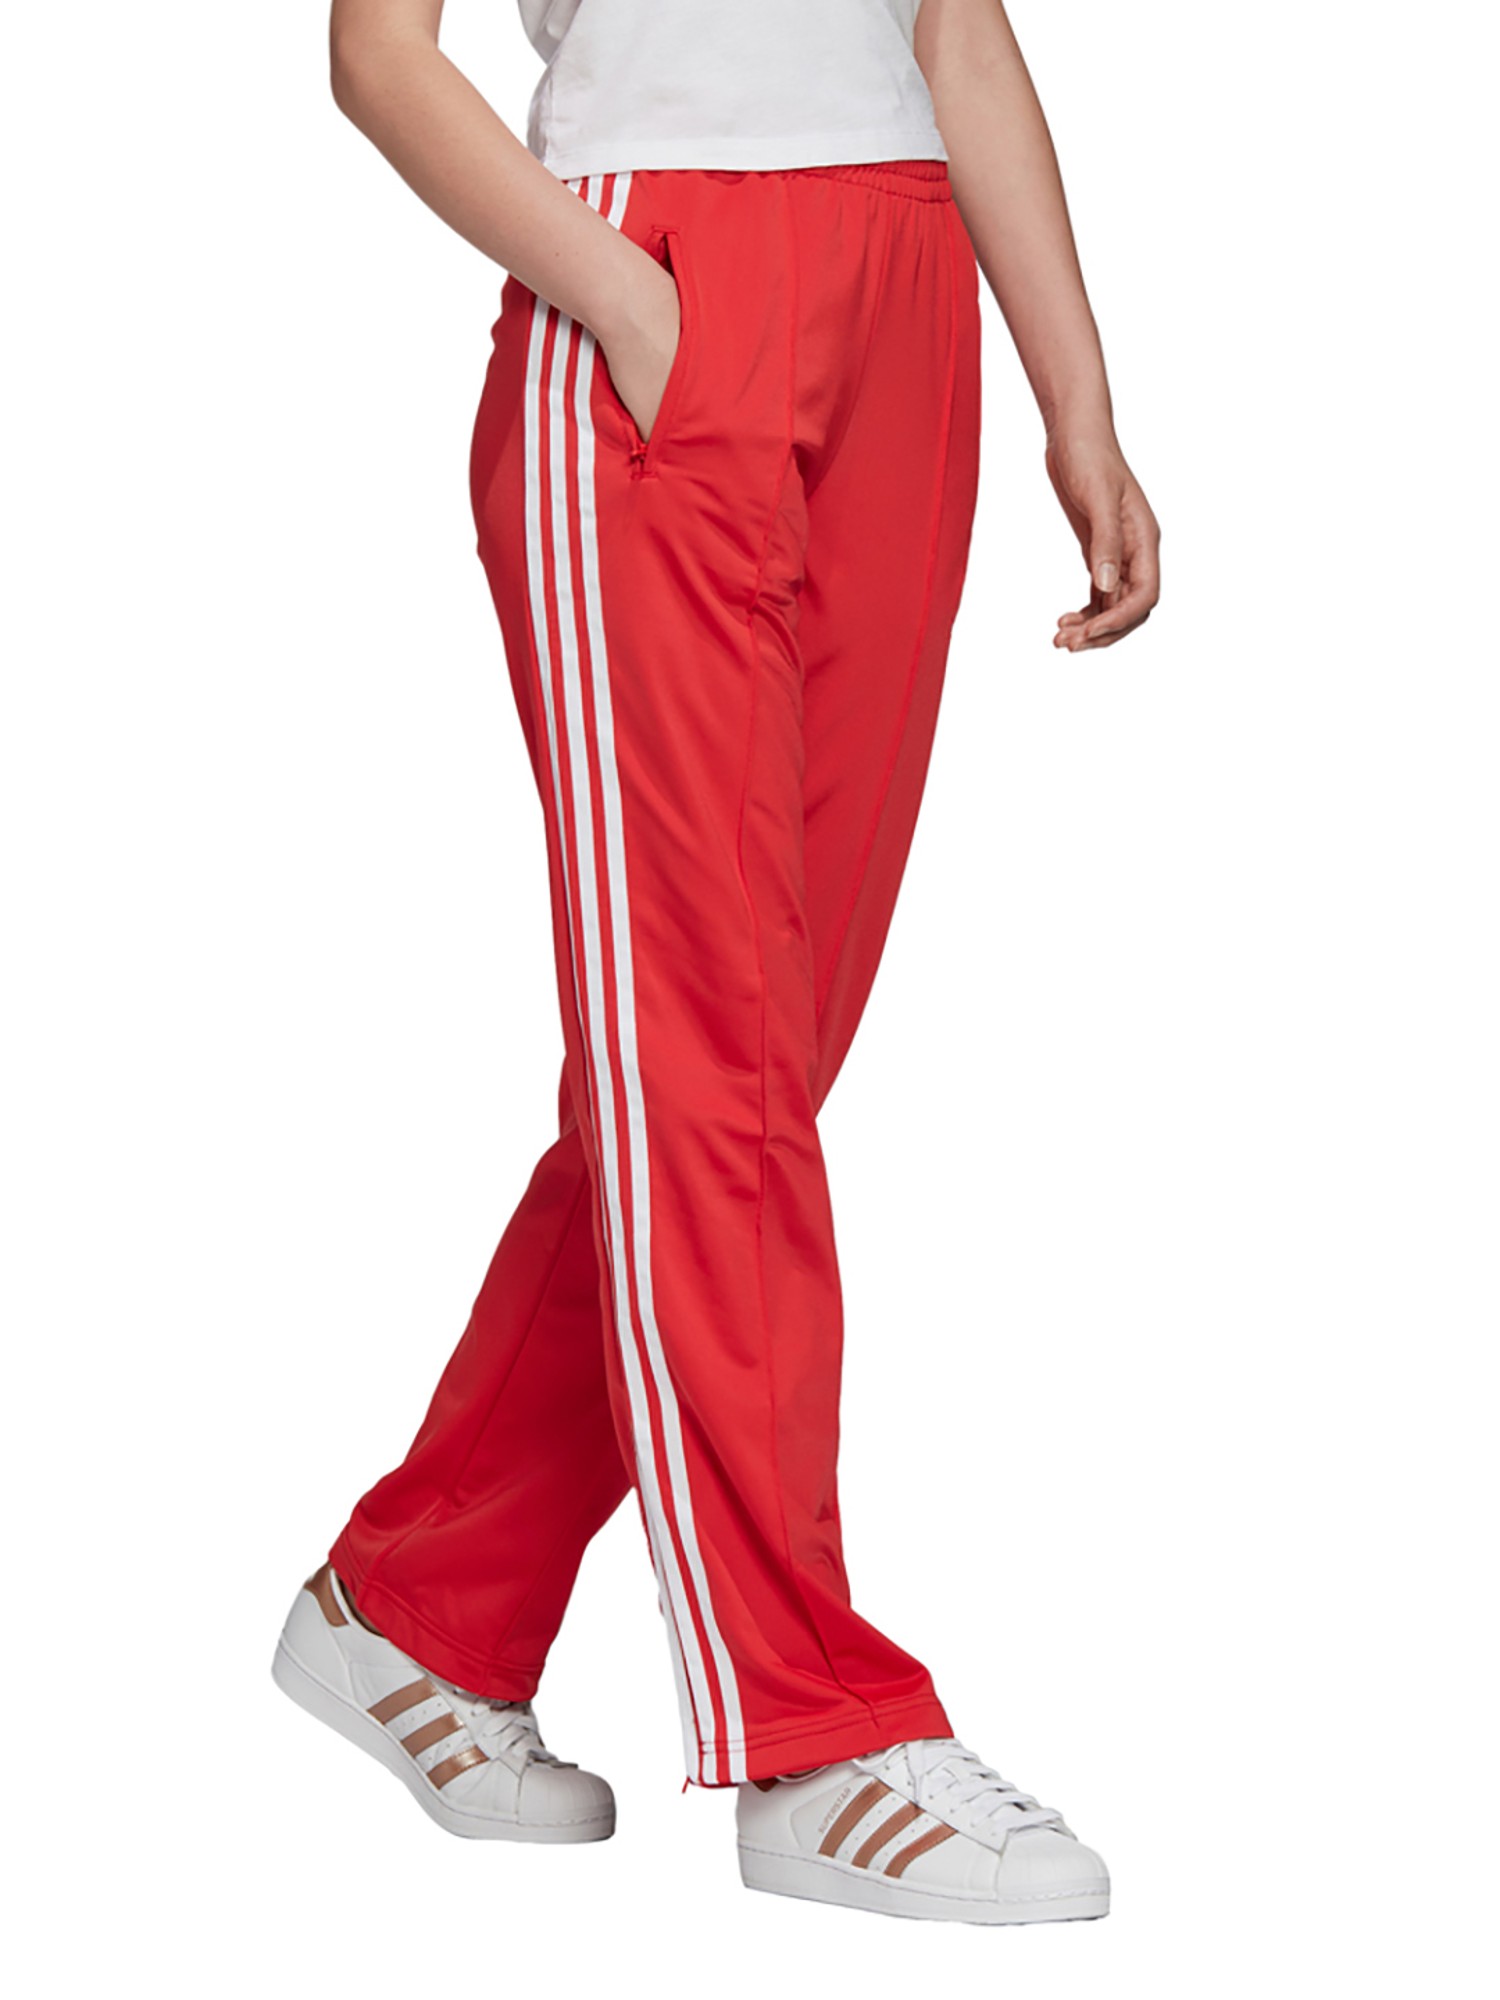 Red adidas Originals SST Track Pants  JD Sports